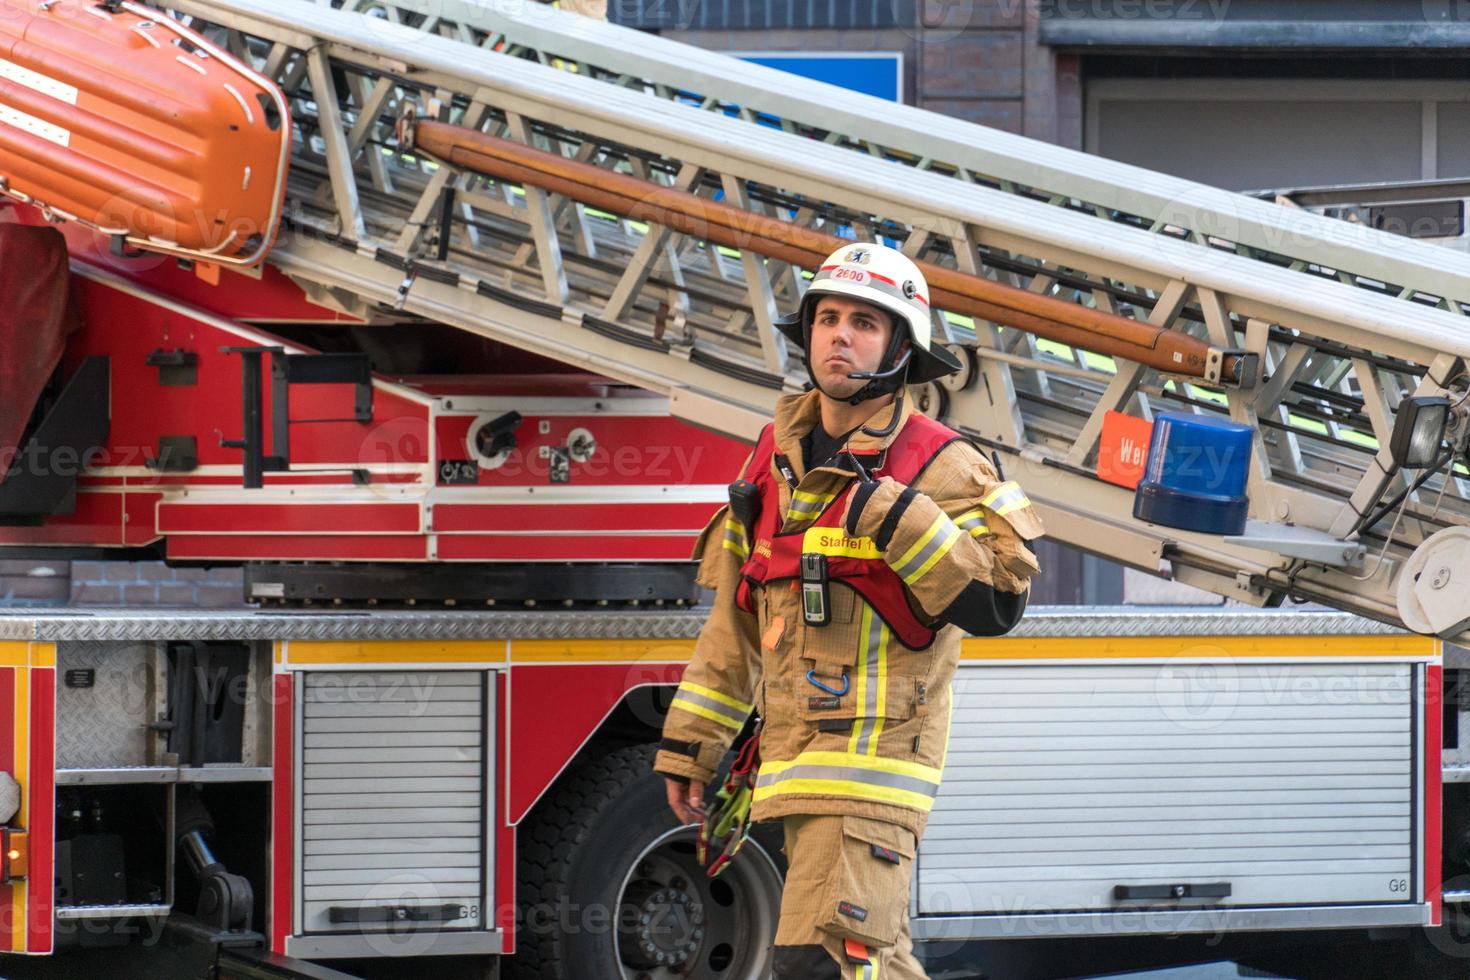 Berliner fire department firefighter at work photo